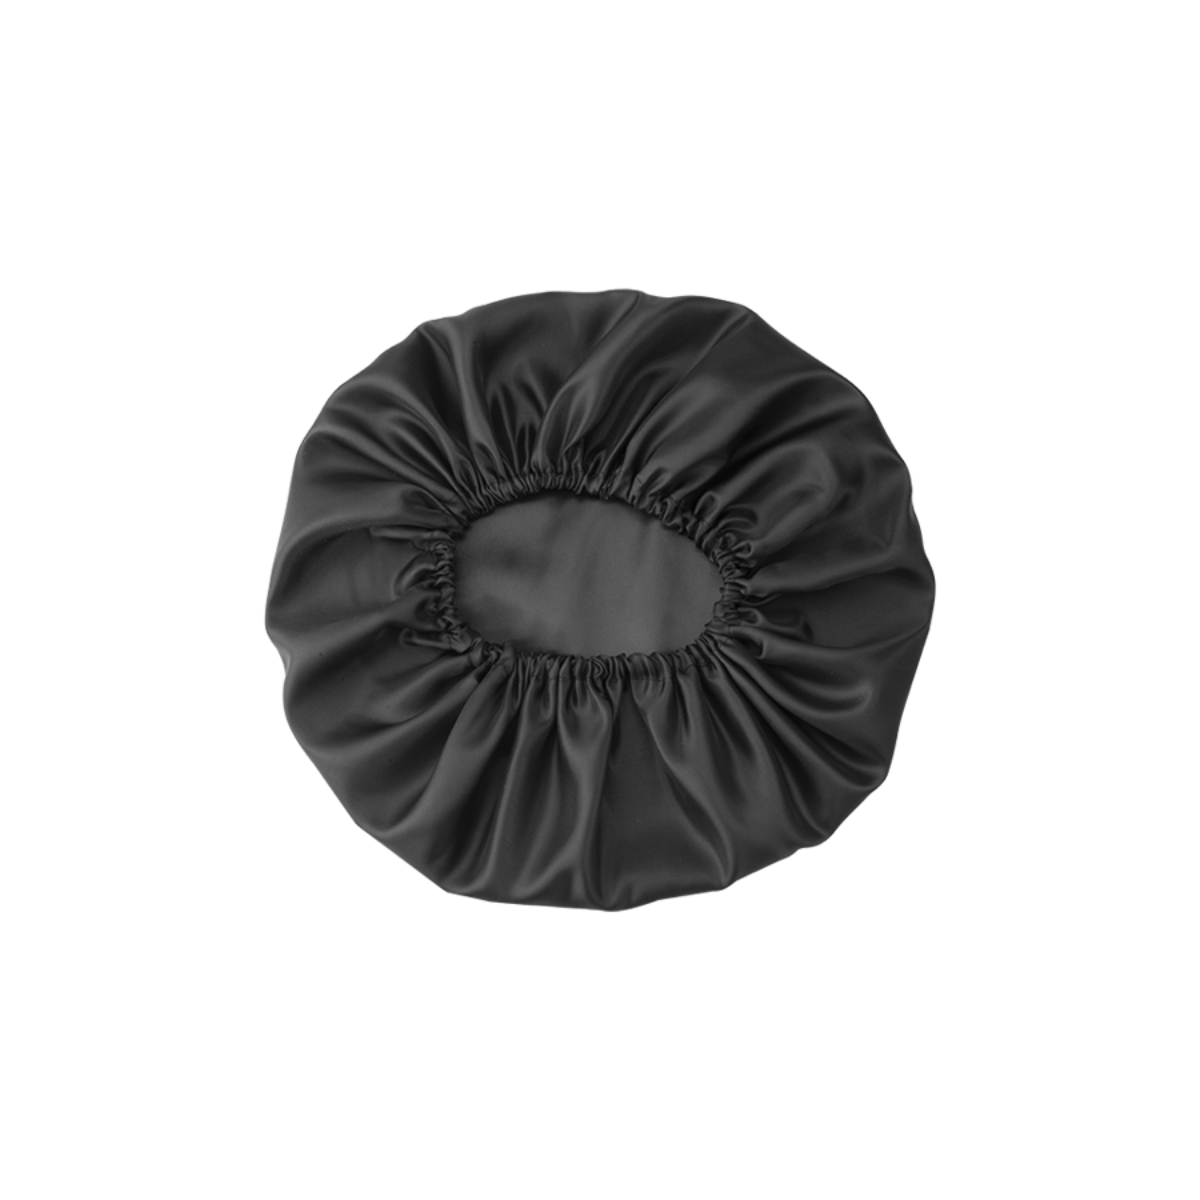 Dompel satin sleep cap for curly, voluminous, or straight hair, Model 392